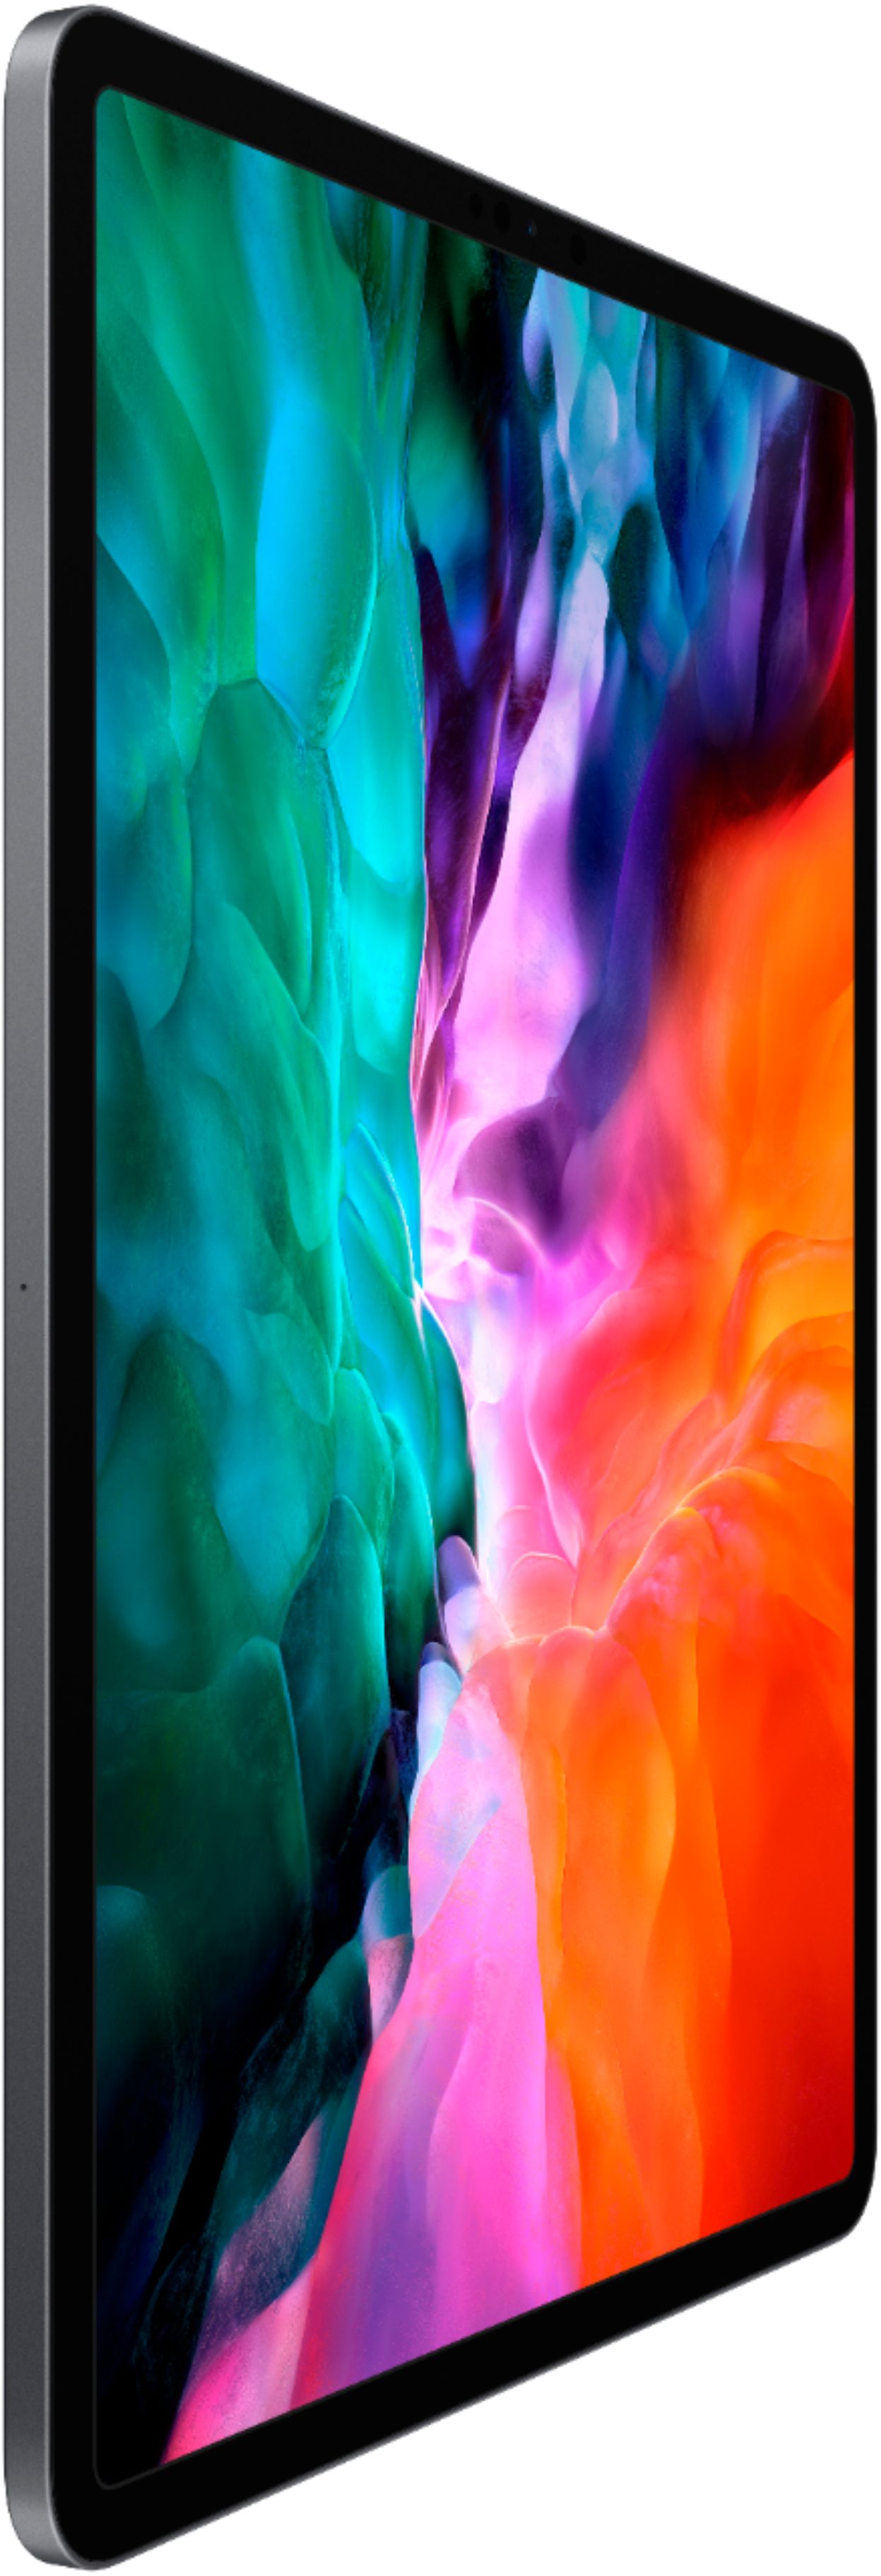 iç giriş mat  Apple 12.9-Inch iPad Pro (4th Generation) with Wi-Fi 256GB Space Gray  MXAT2LL/A - Best Buy